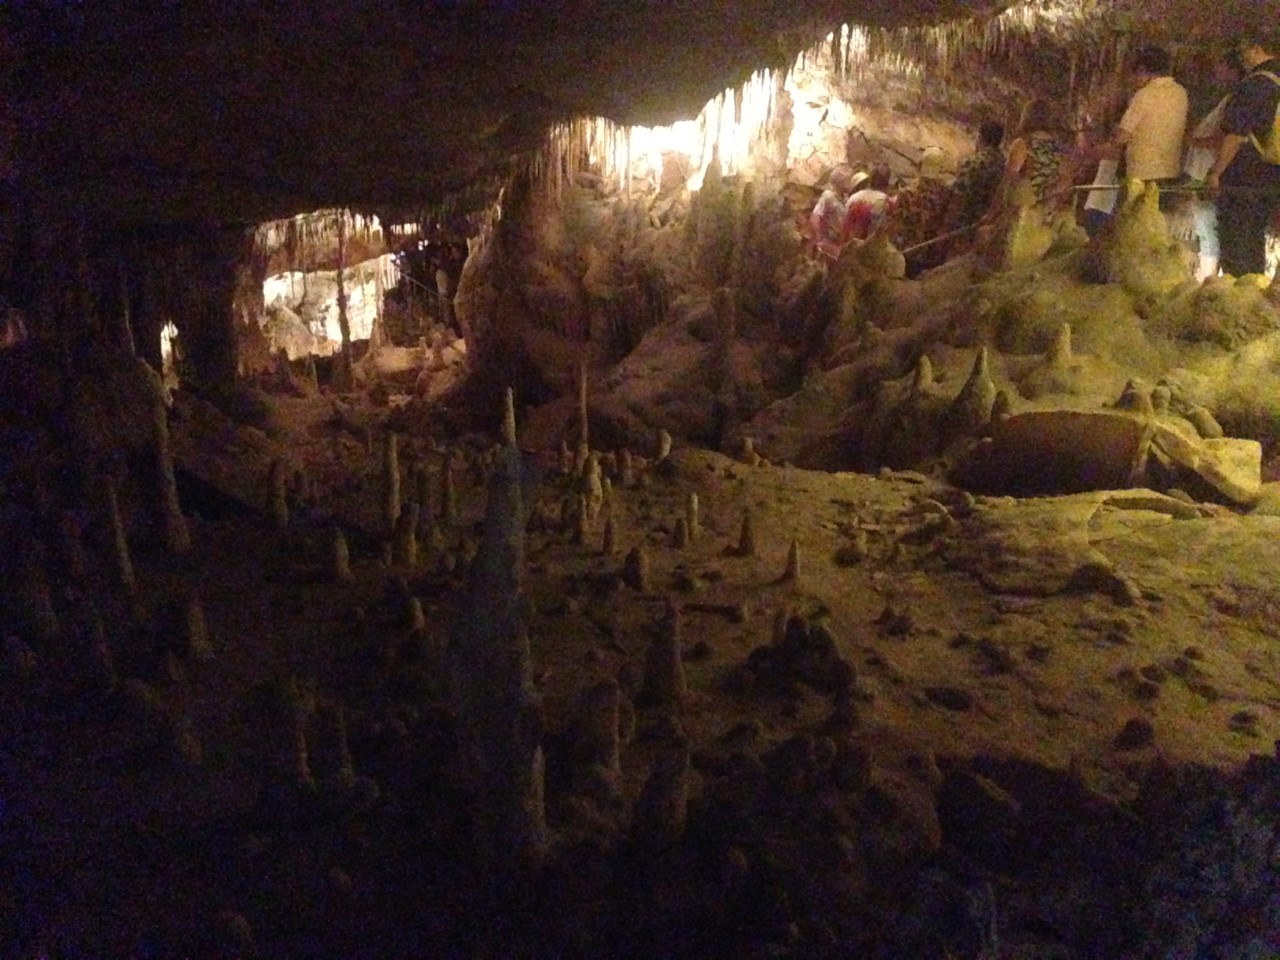 grotten.jpg